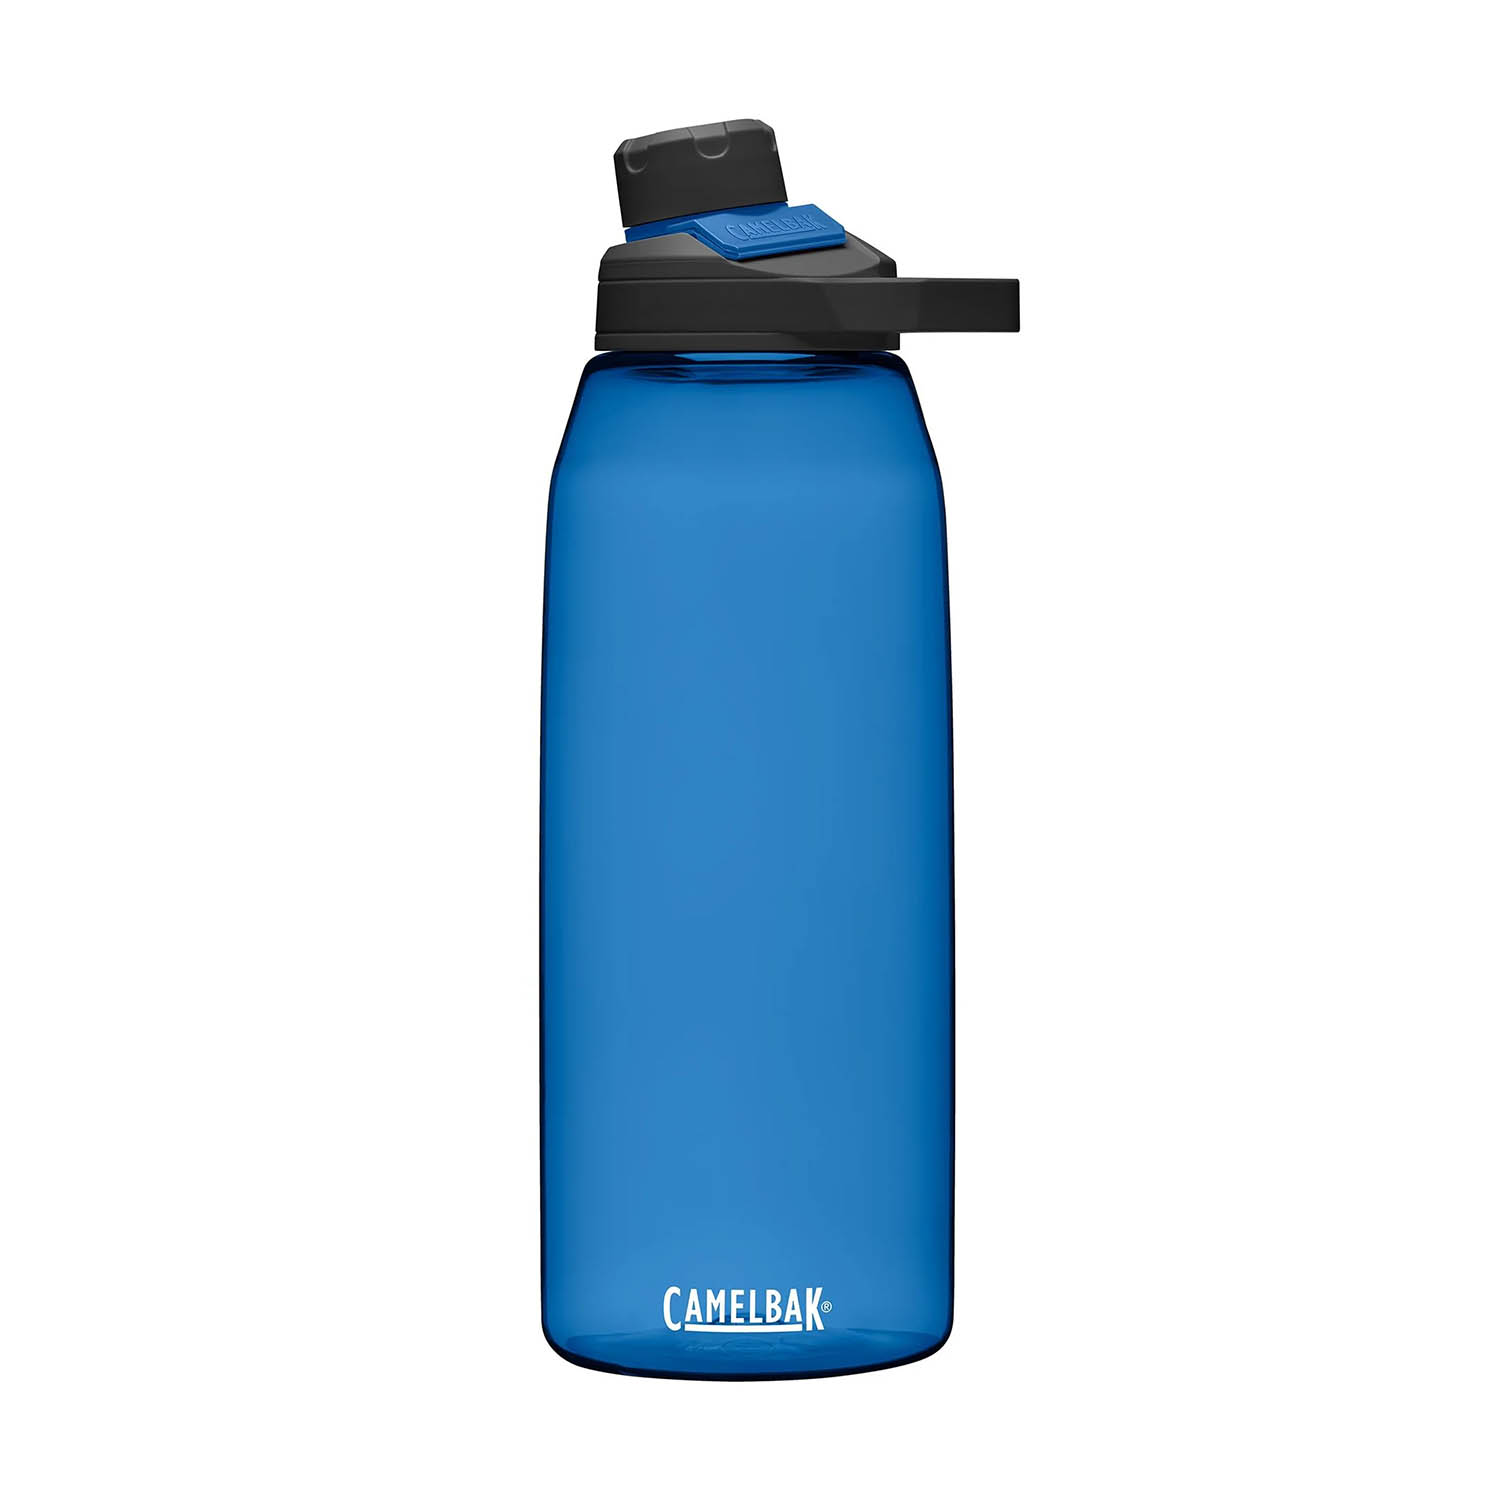 Camelbak Chute Mag 1.5 L Water bottle - Oxford